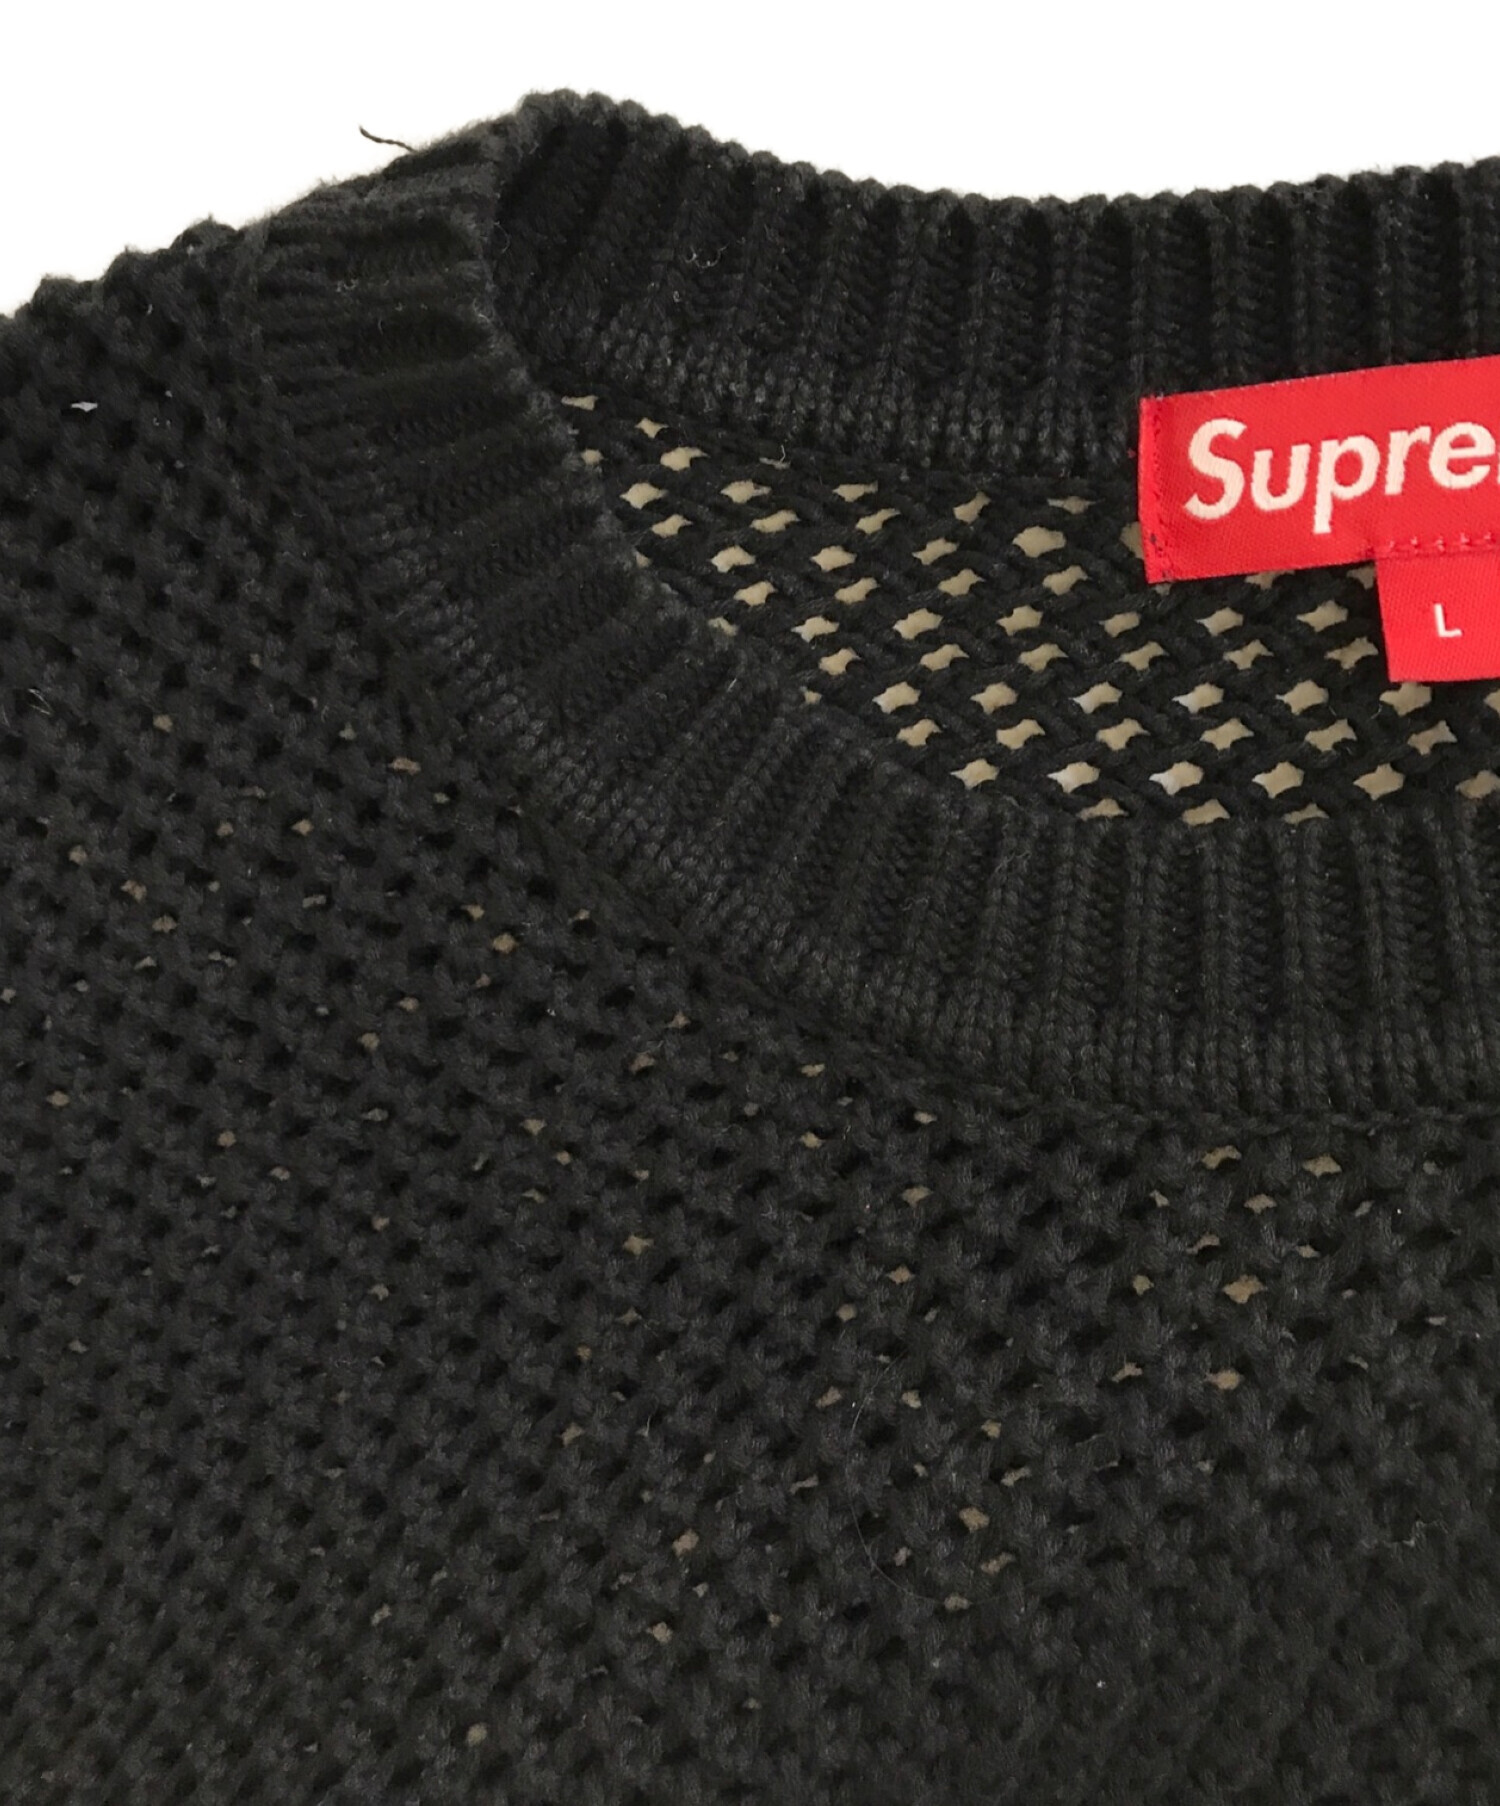 supreme small box sweater 20AW 黒 サイズL